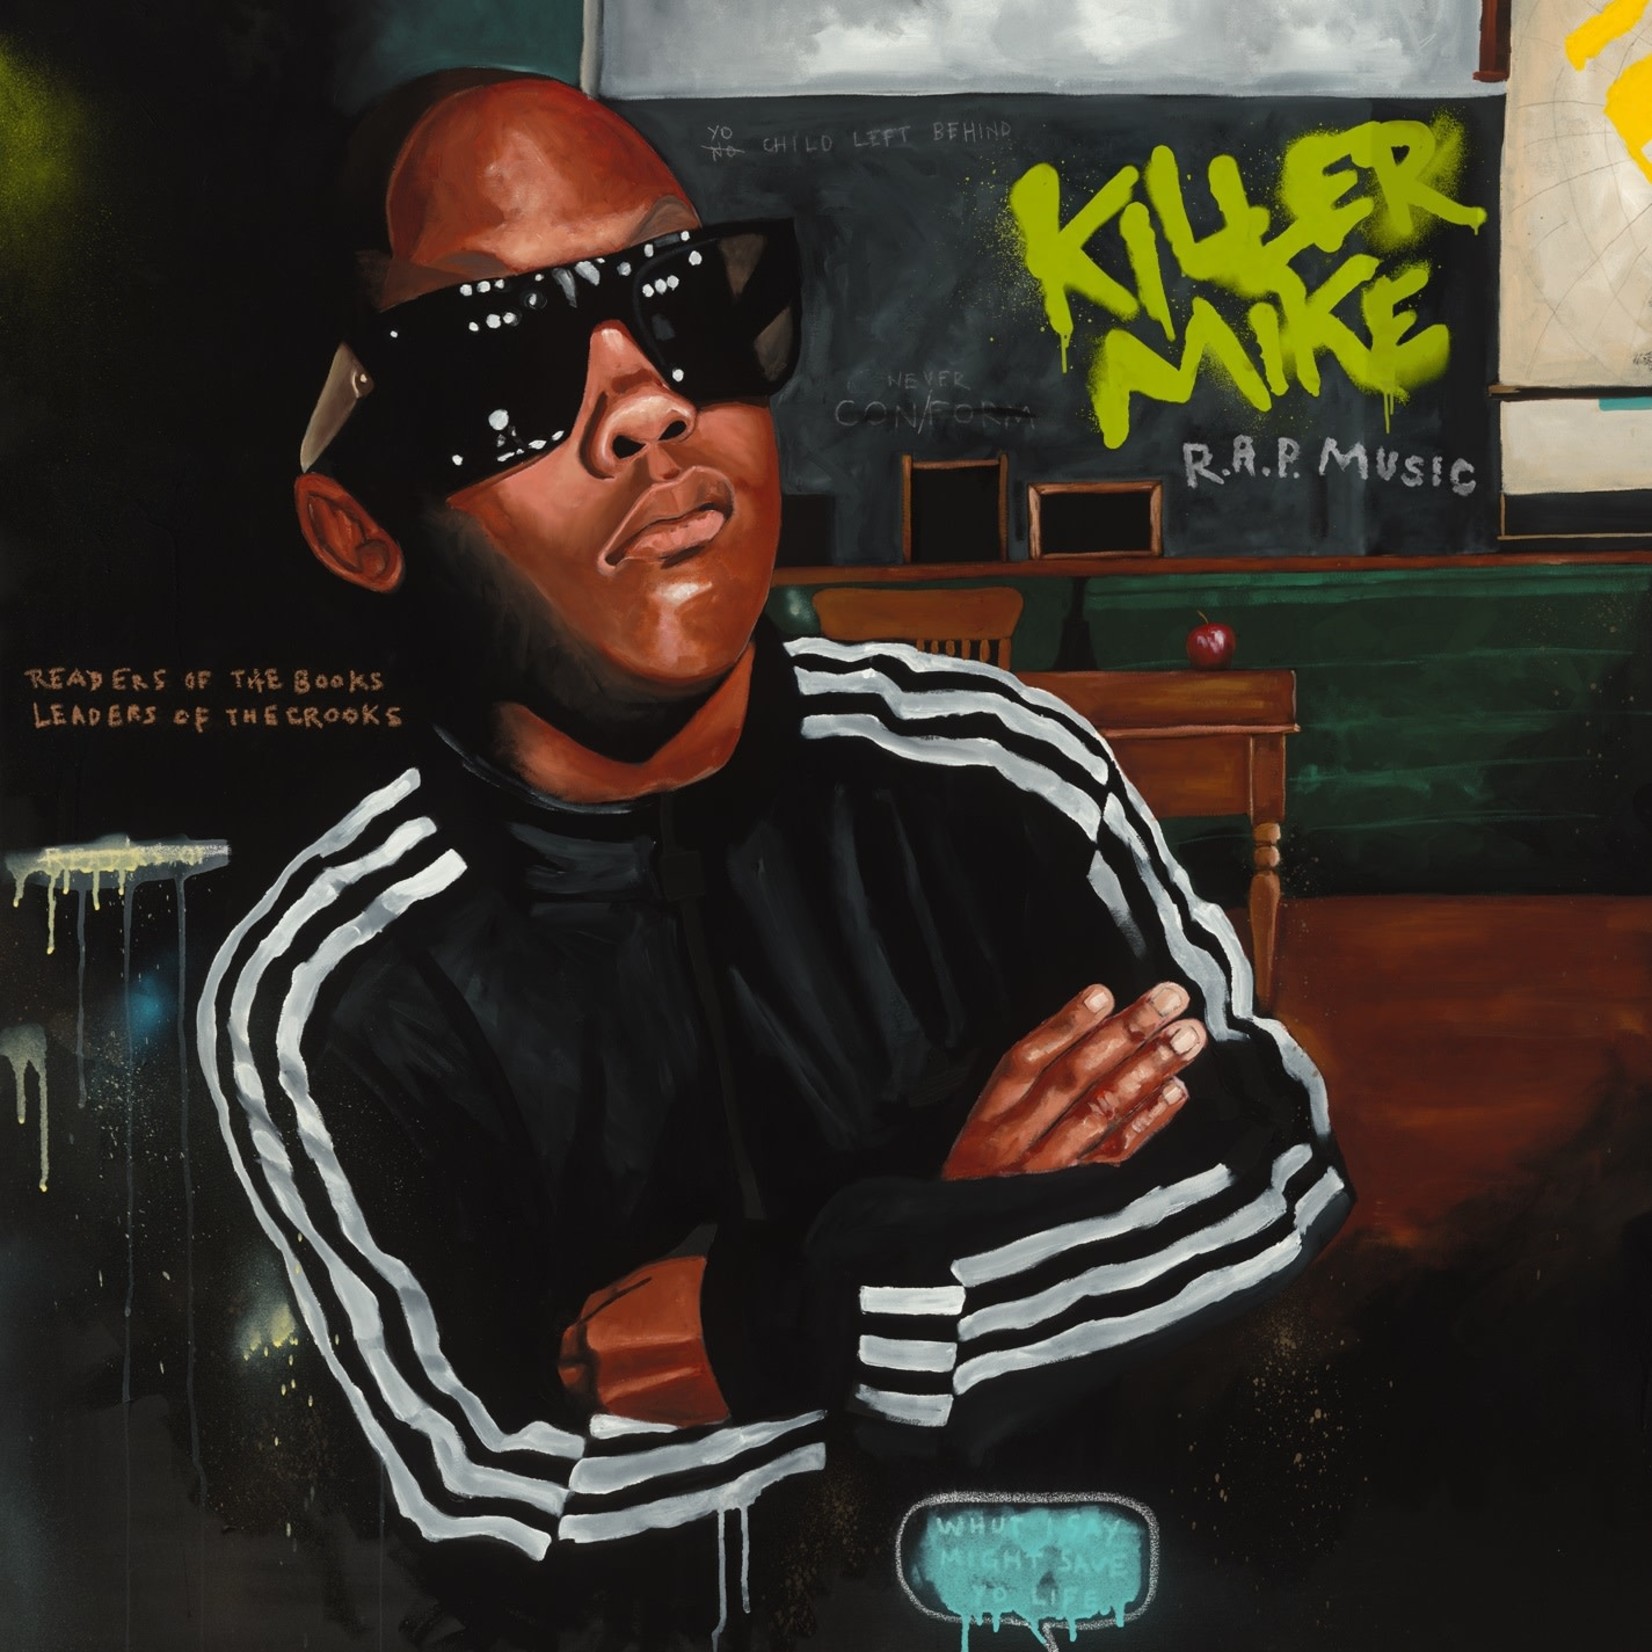 [New] Killer Mike - R.A.P. Music (2LP, green vinyl, reissue w/album instrumentals)